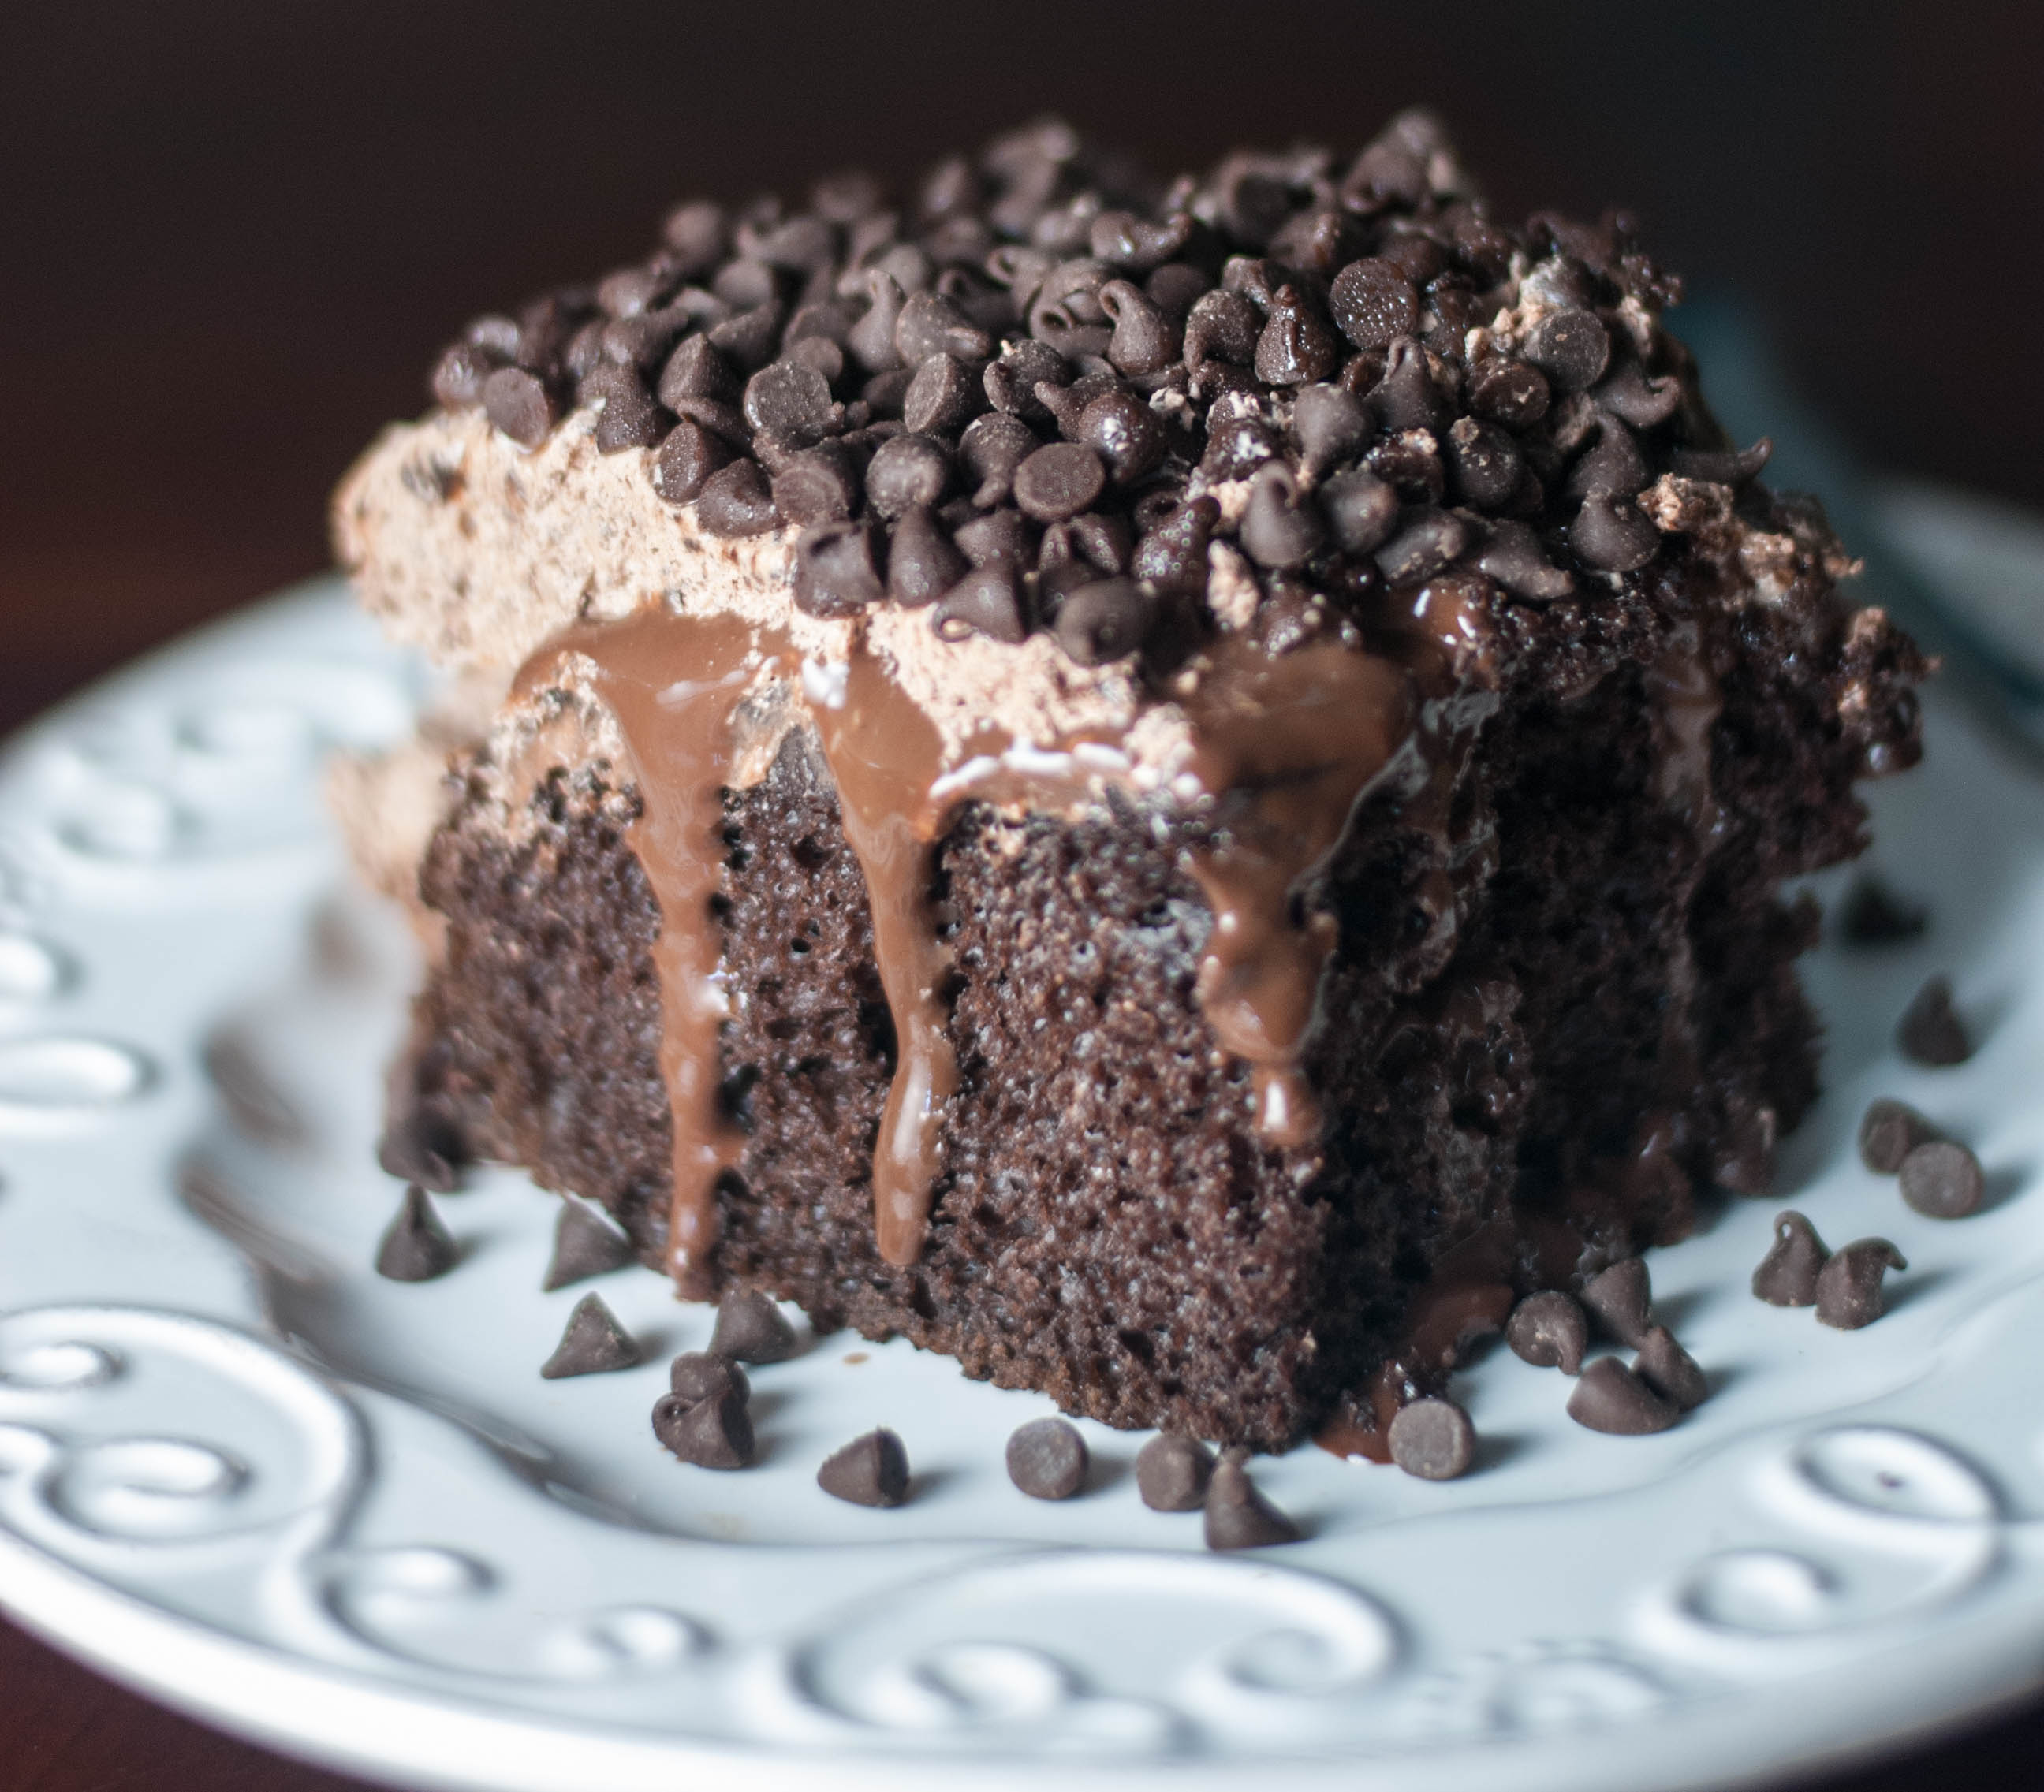 Chocolate Pudding Poke Cake - TGIF - This Grandma is Fun